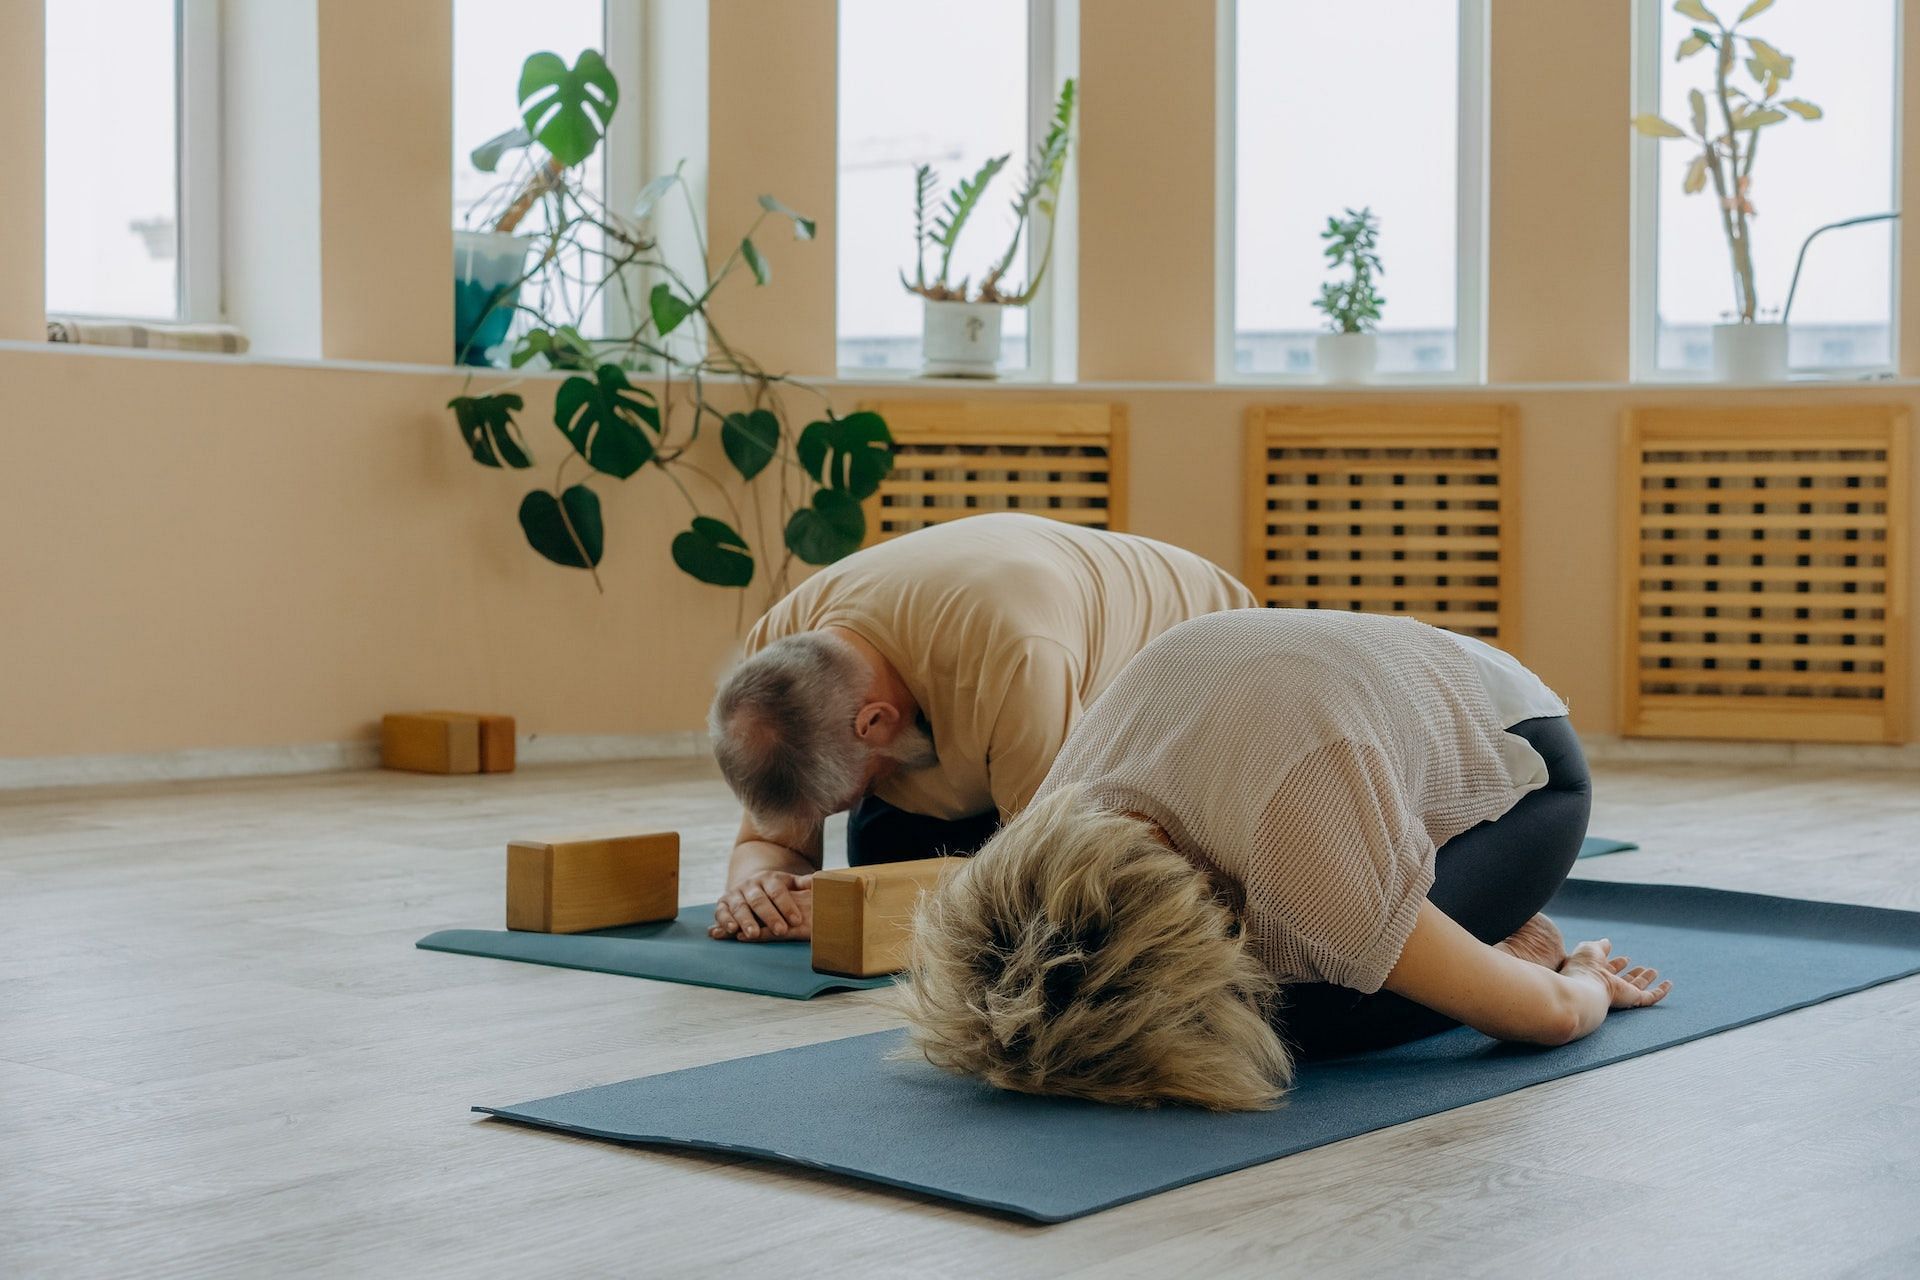 Yoga exercises offer great advantages to seniors. (Photo via Pexels/Mikhail Nilov)